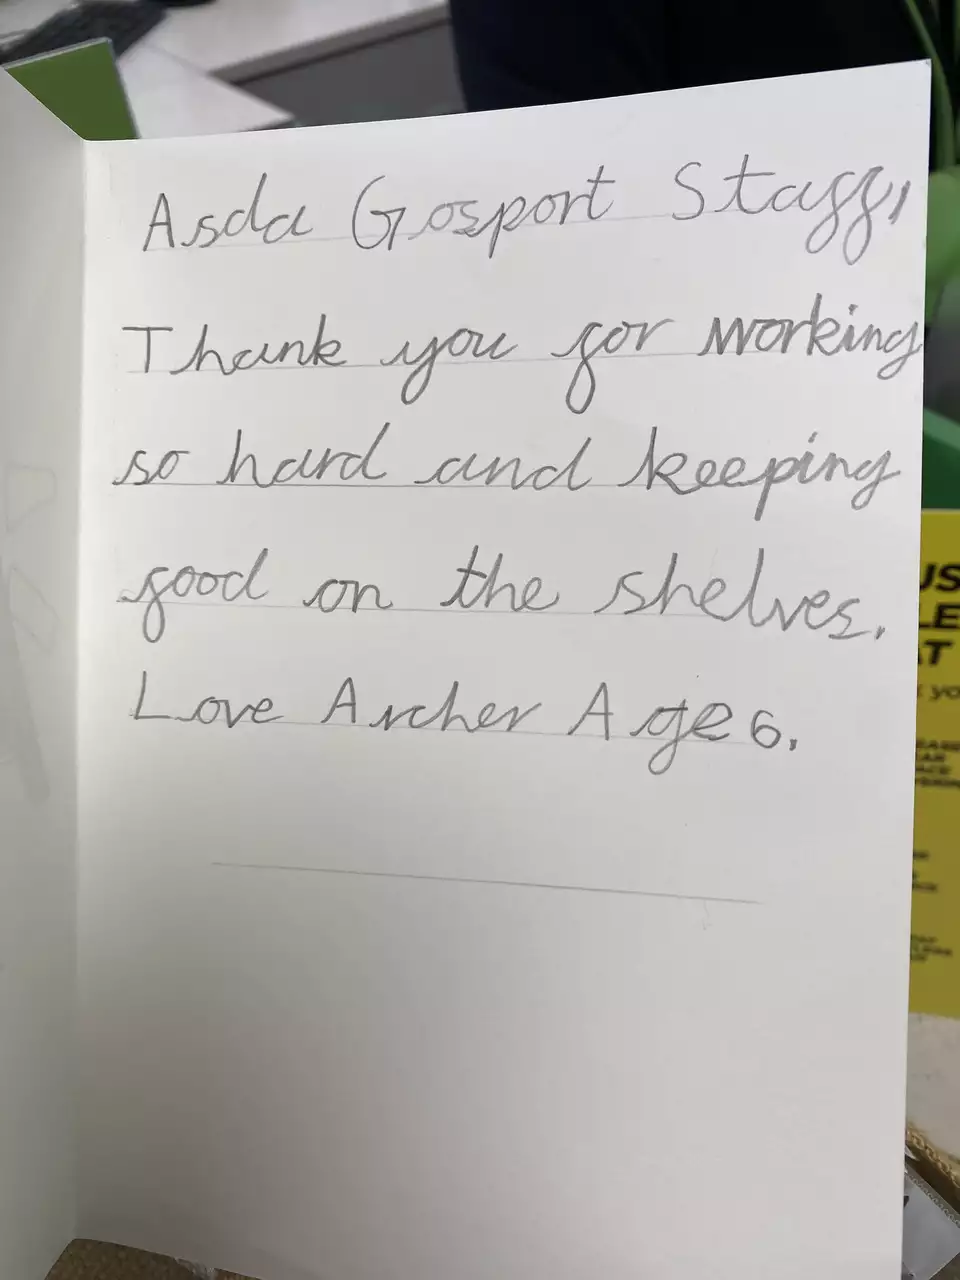 A little thanks goes a long way.  | Asda Gosport